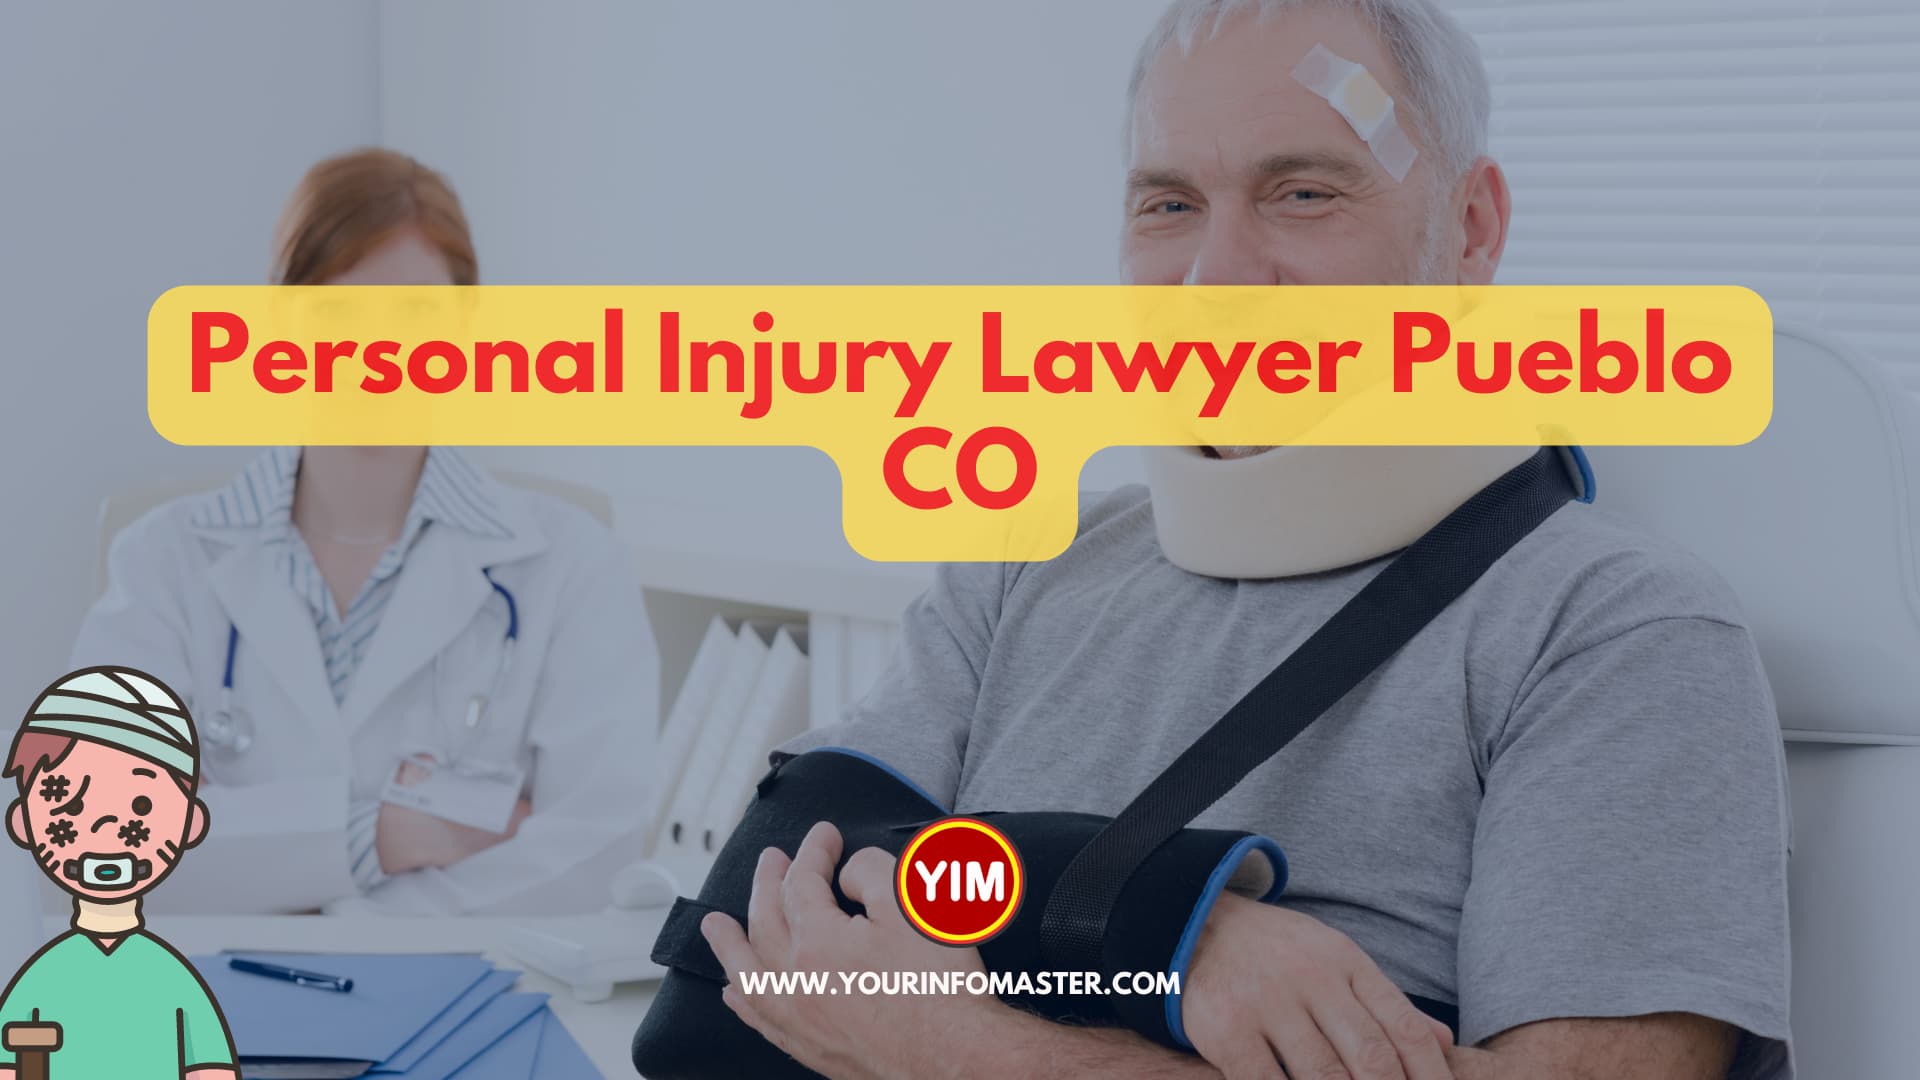 Personal Injury Lawyer Pueblo CO | Personal Injury Attorneys, Info Gallery, Information, Marketing, Personal Injury Lawyer